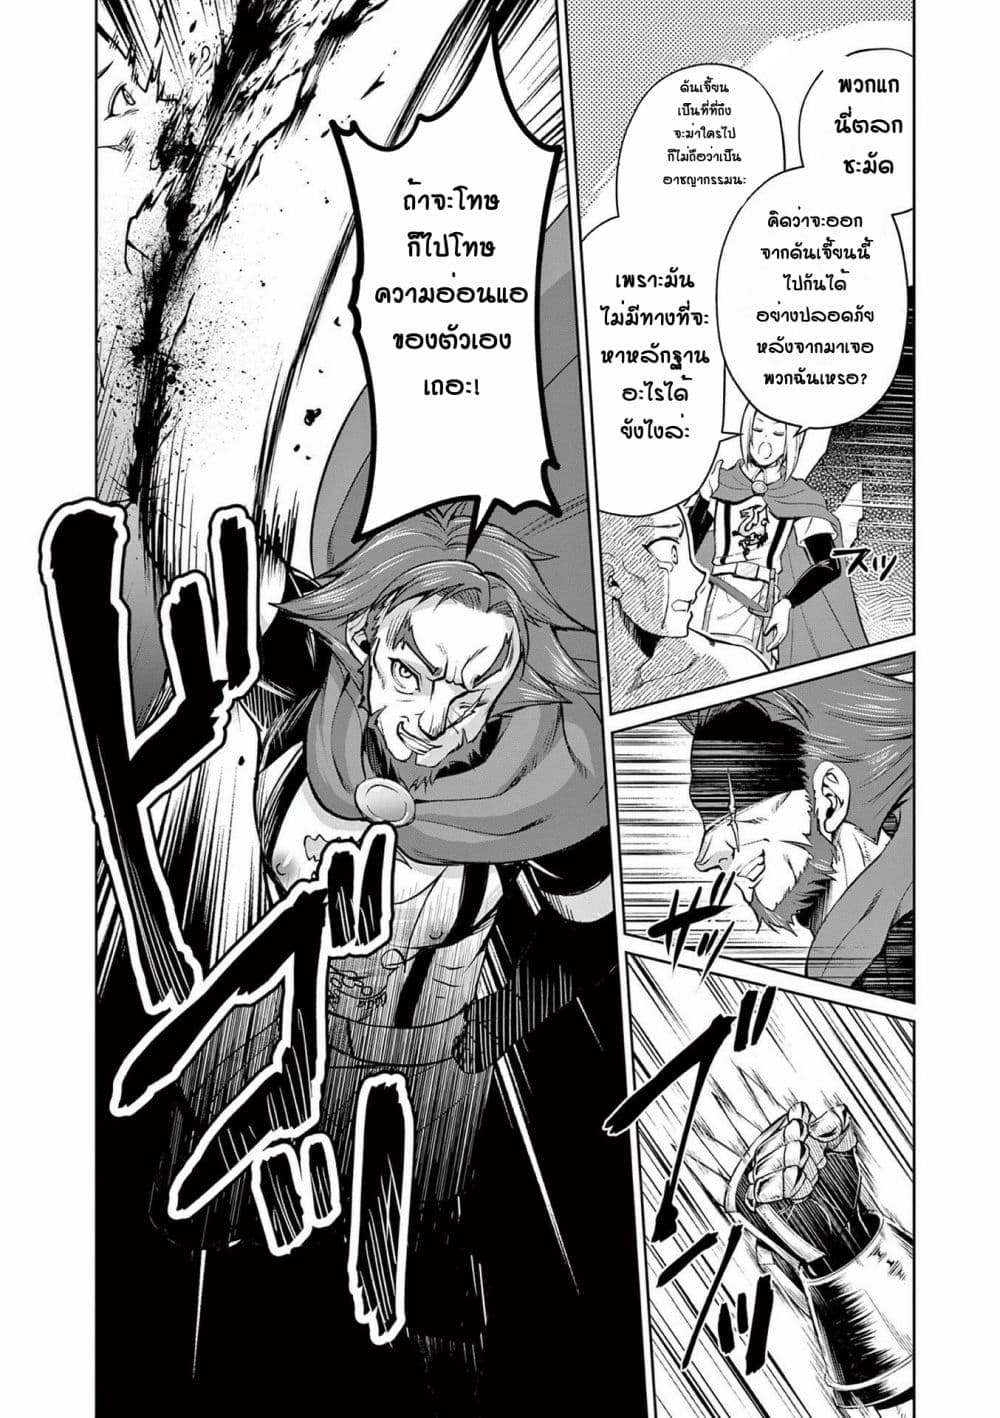 Moto Shogun no Undead Knight 9 (26)